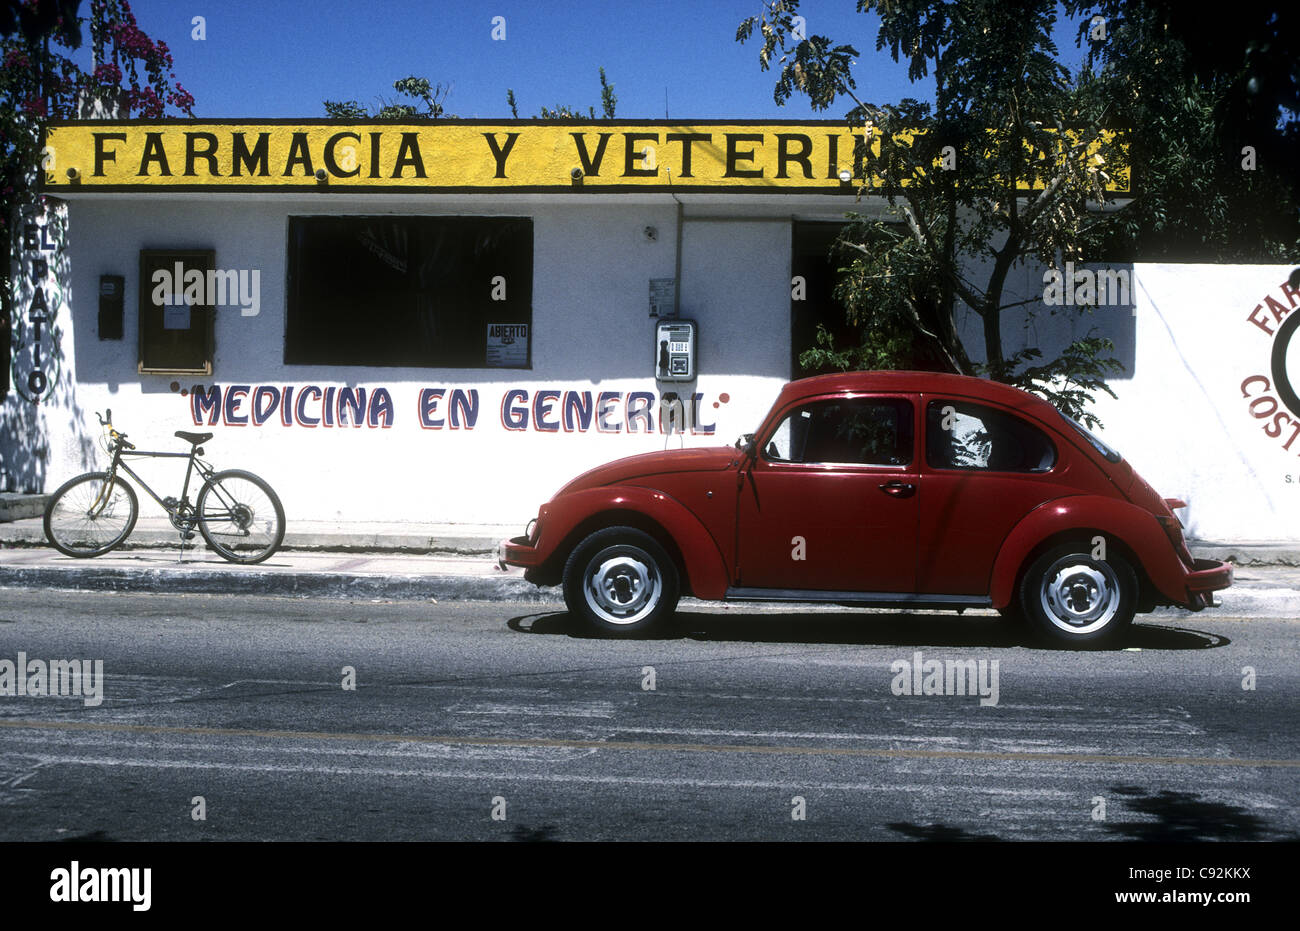 A red Volkswagen car in Todos Santos, Baja California, Mexico Stock Photo